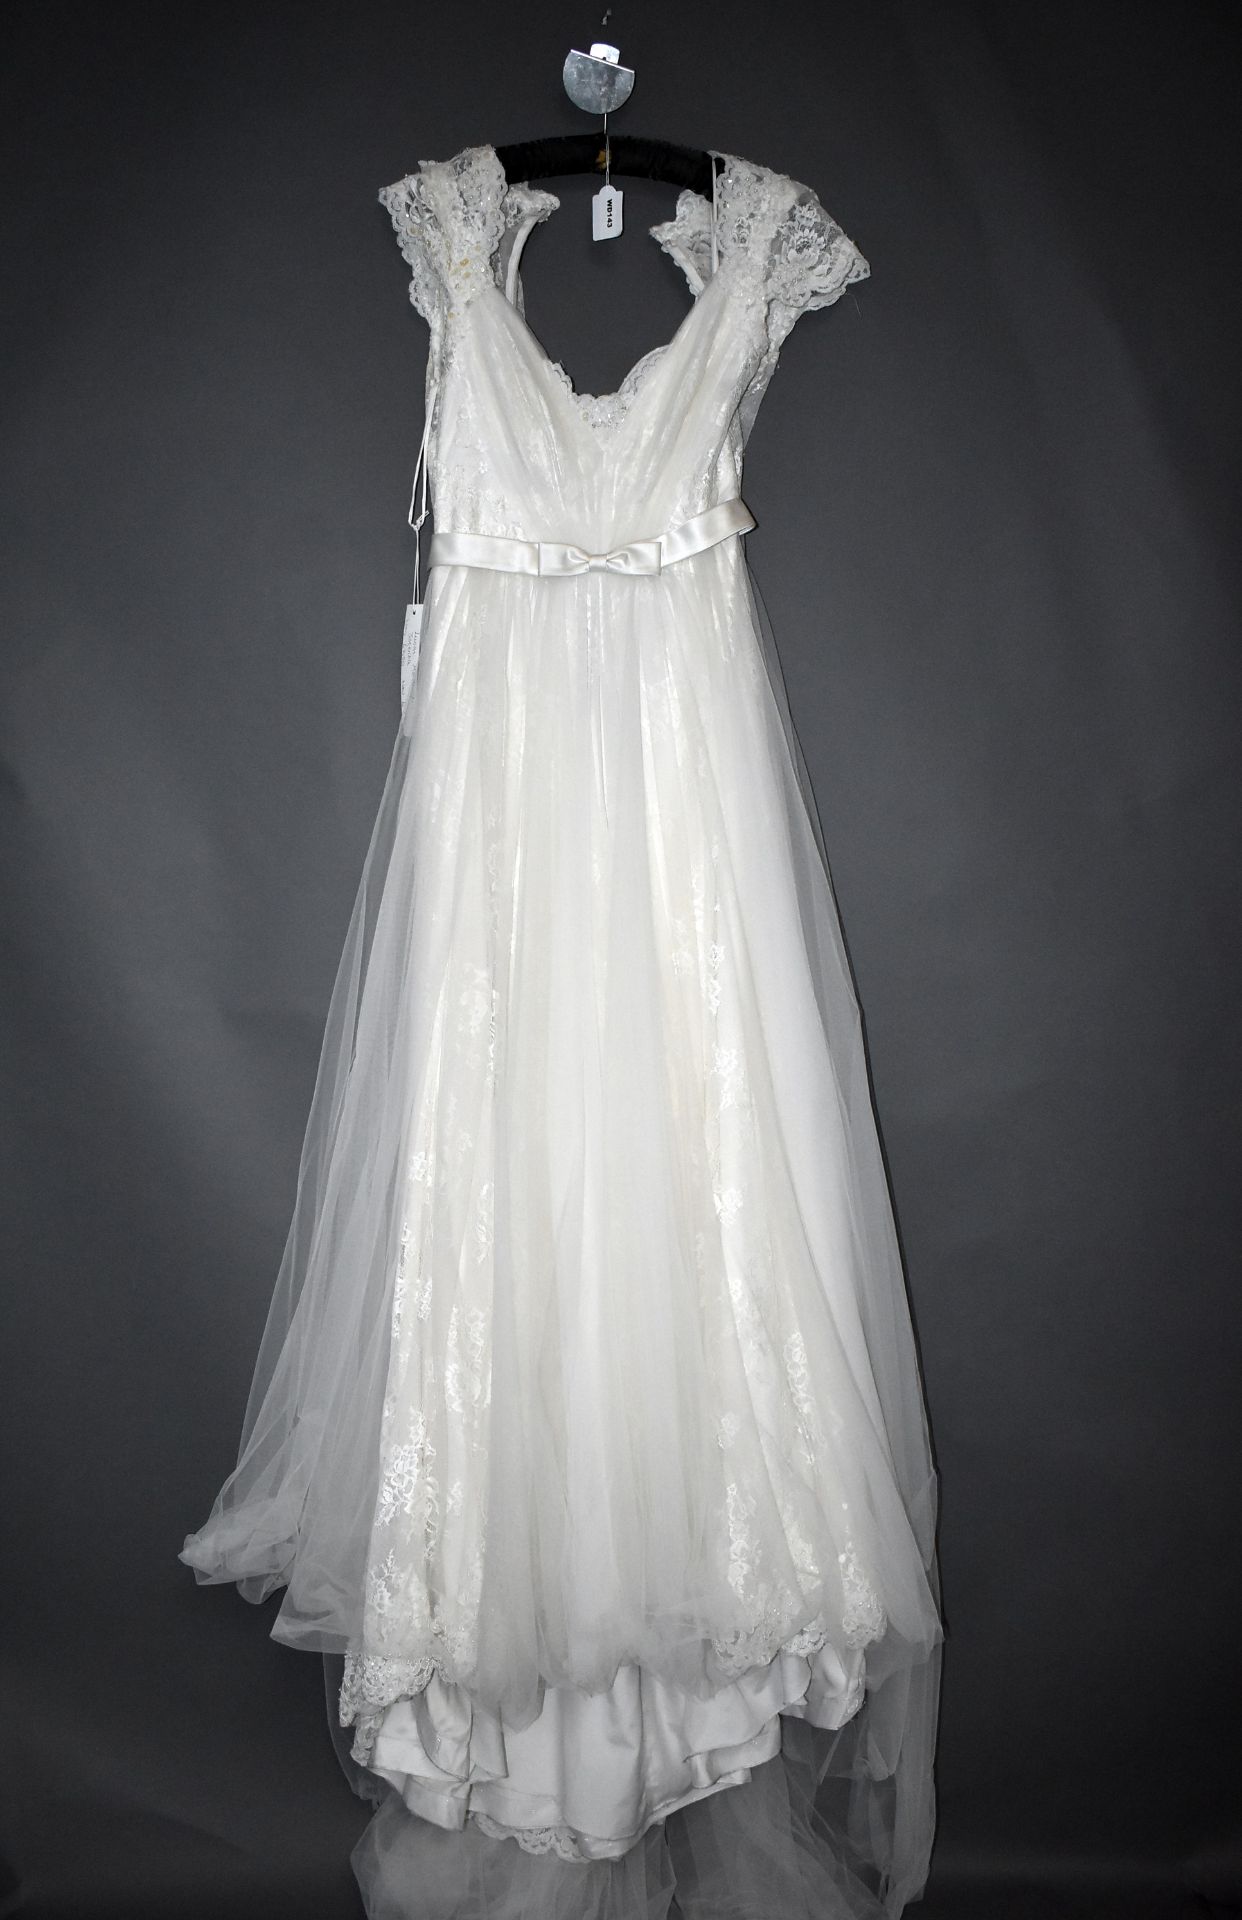 1 x LUSAN MANDONGUS Lace And Chiffon Designer Wedding Dress Bridal Gown RRP £1,450 UK 12